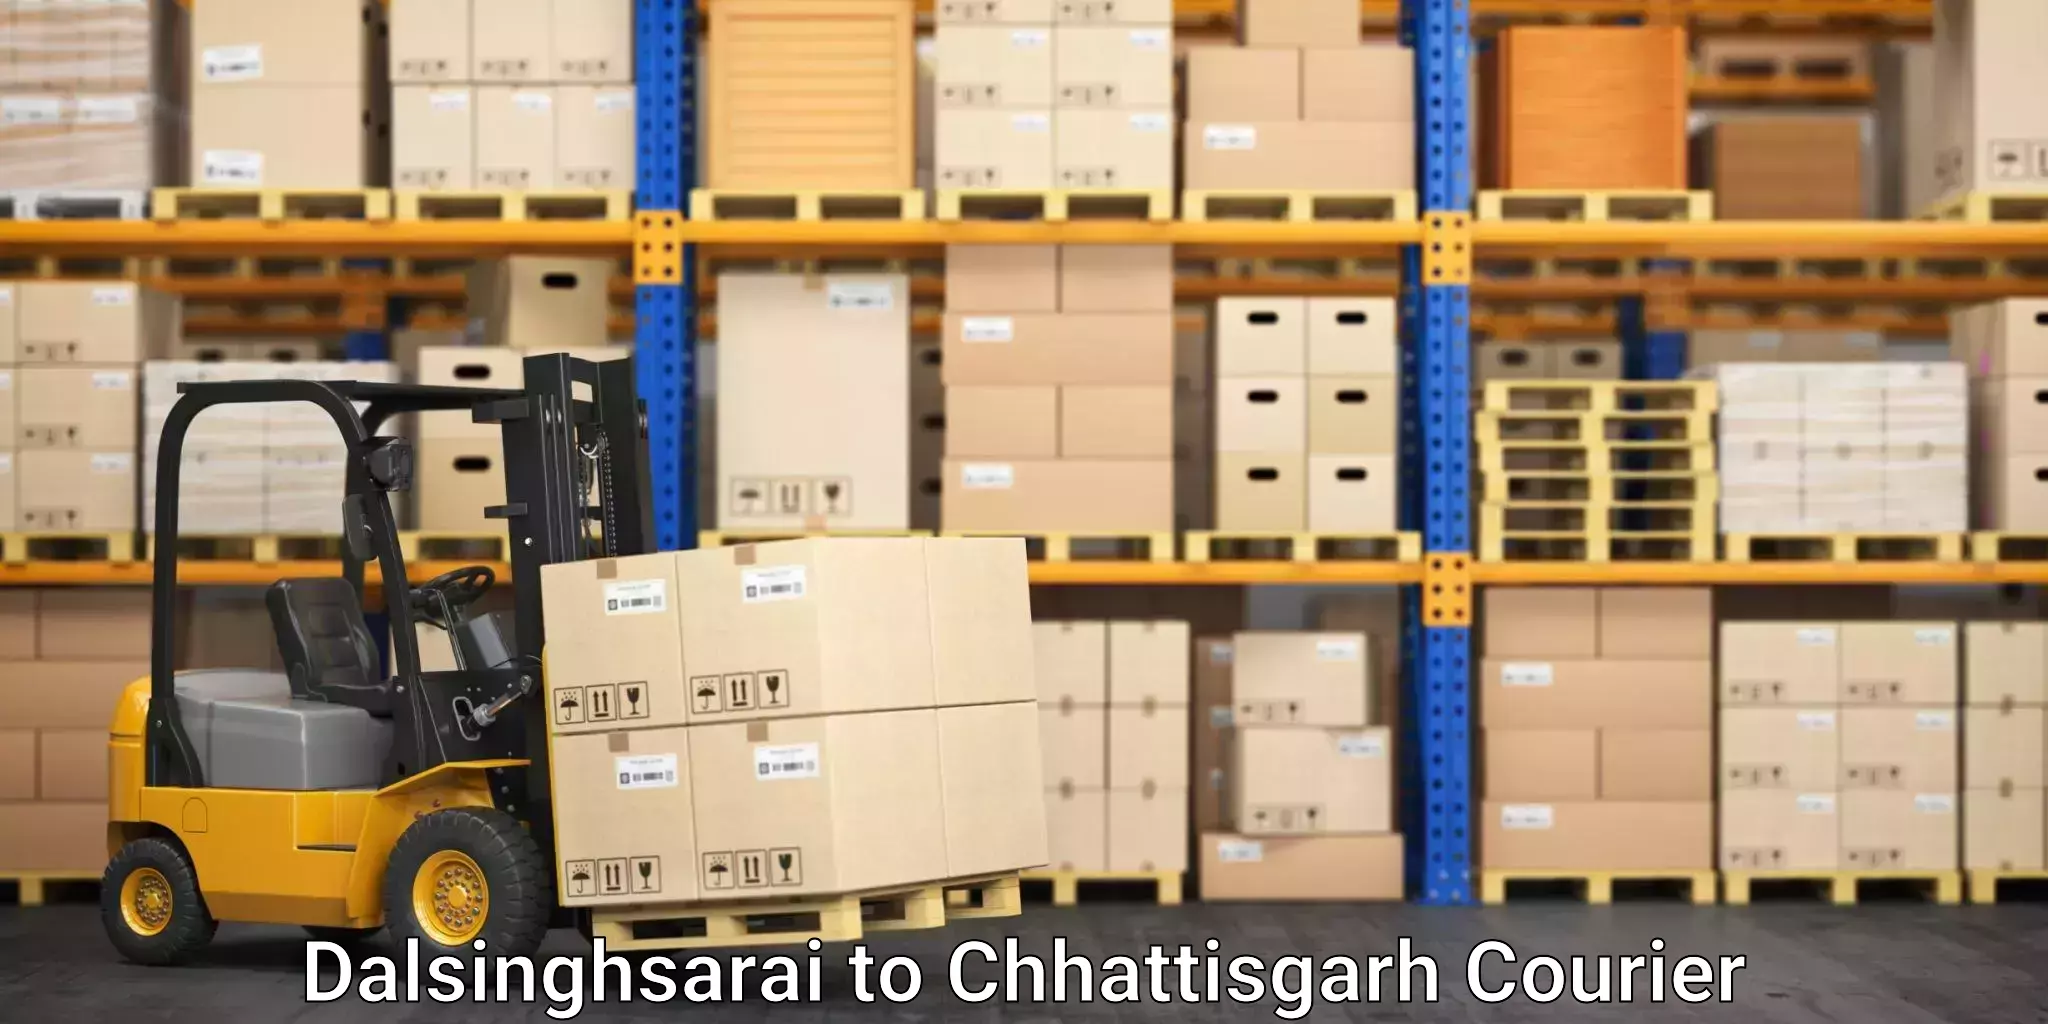 Household moving experts Dalsinghsarai to Nagri